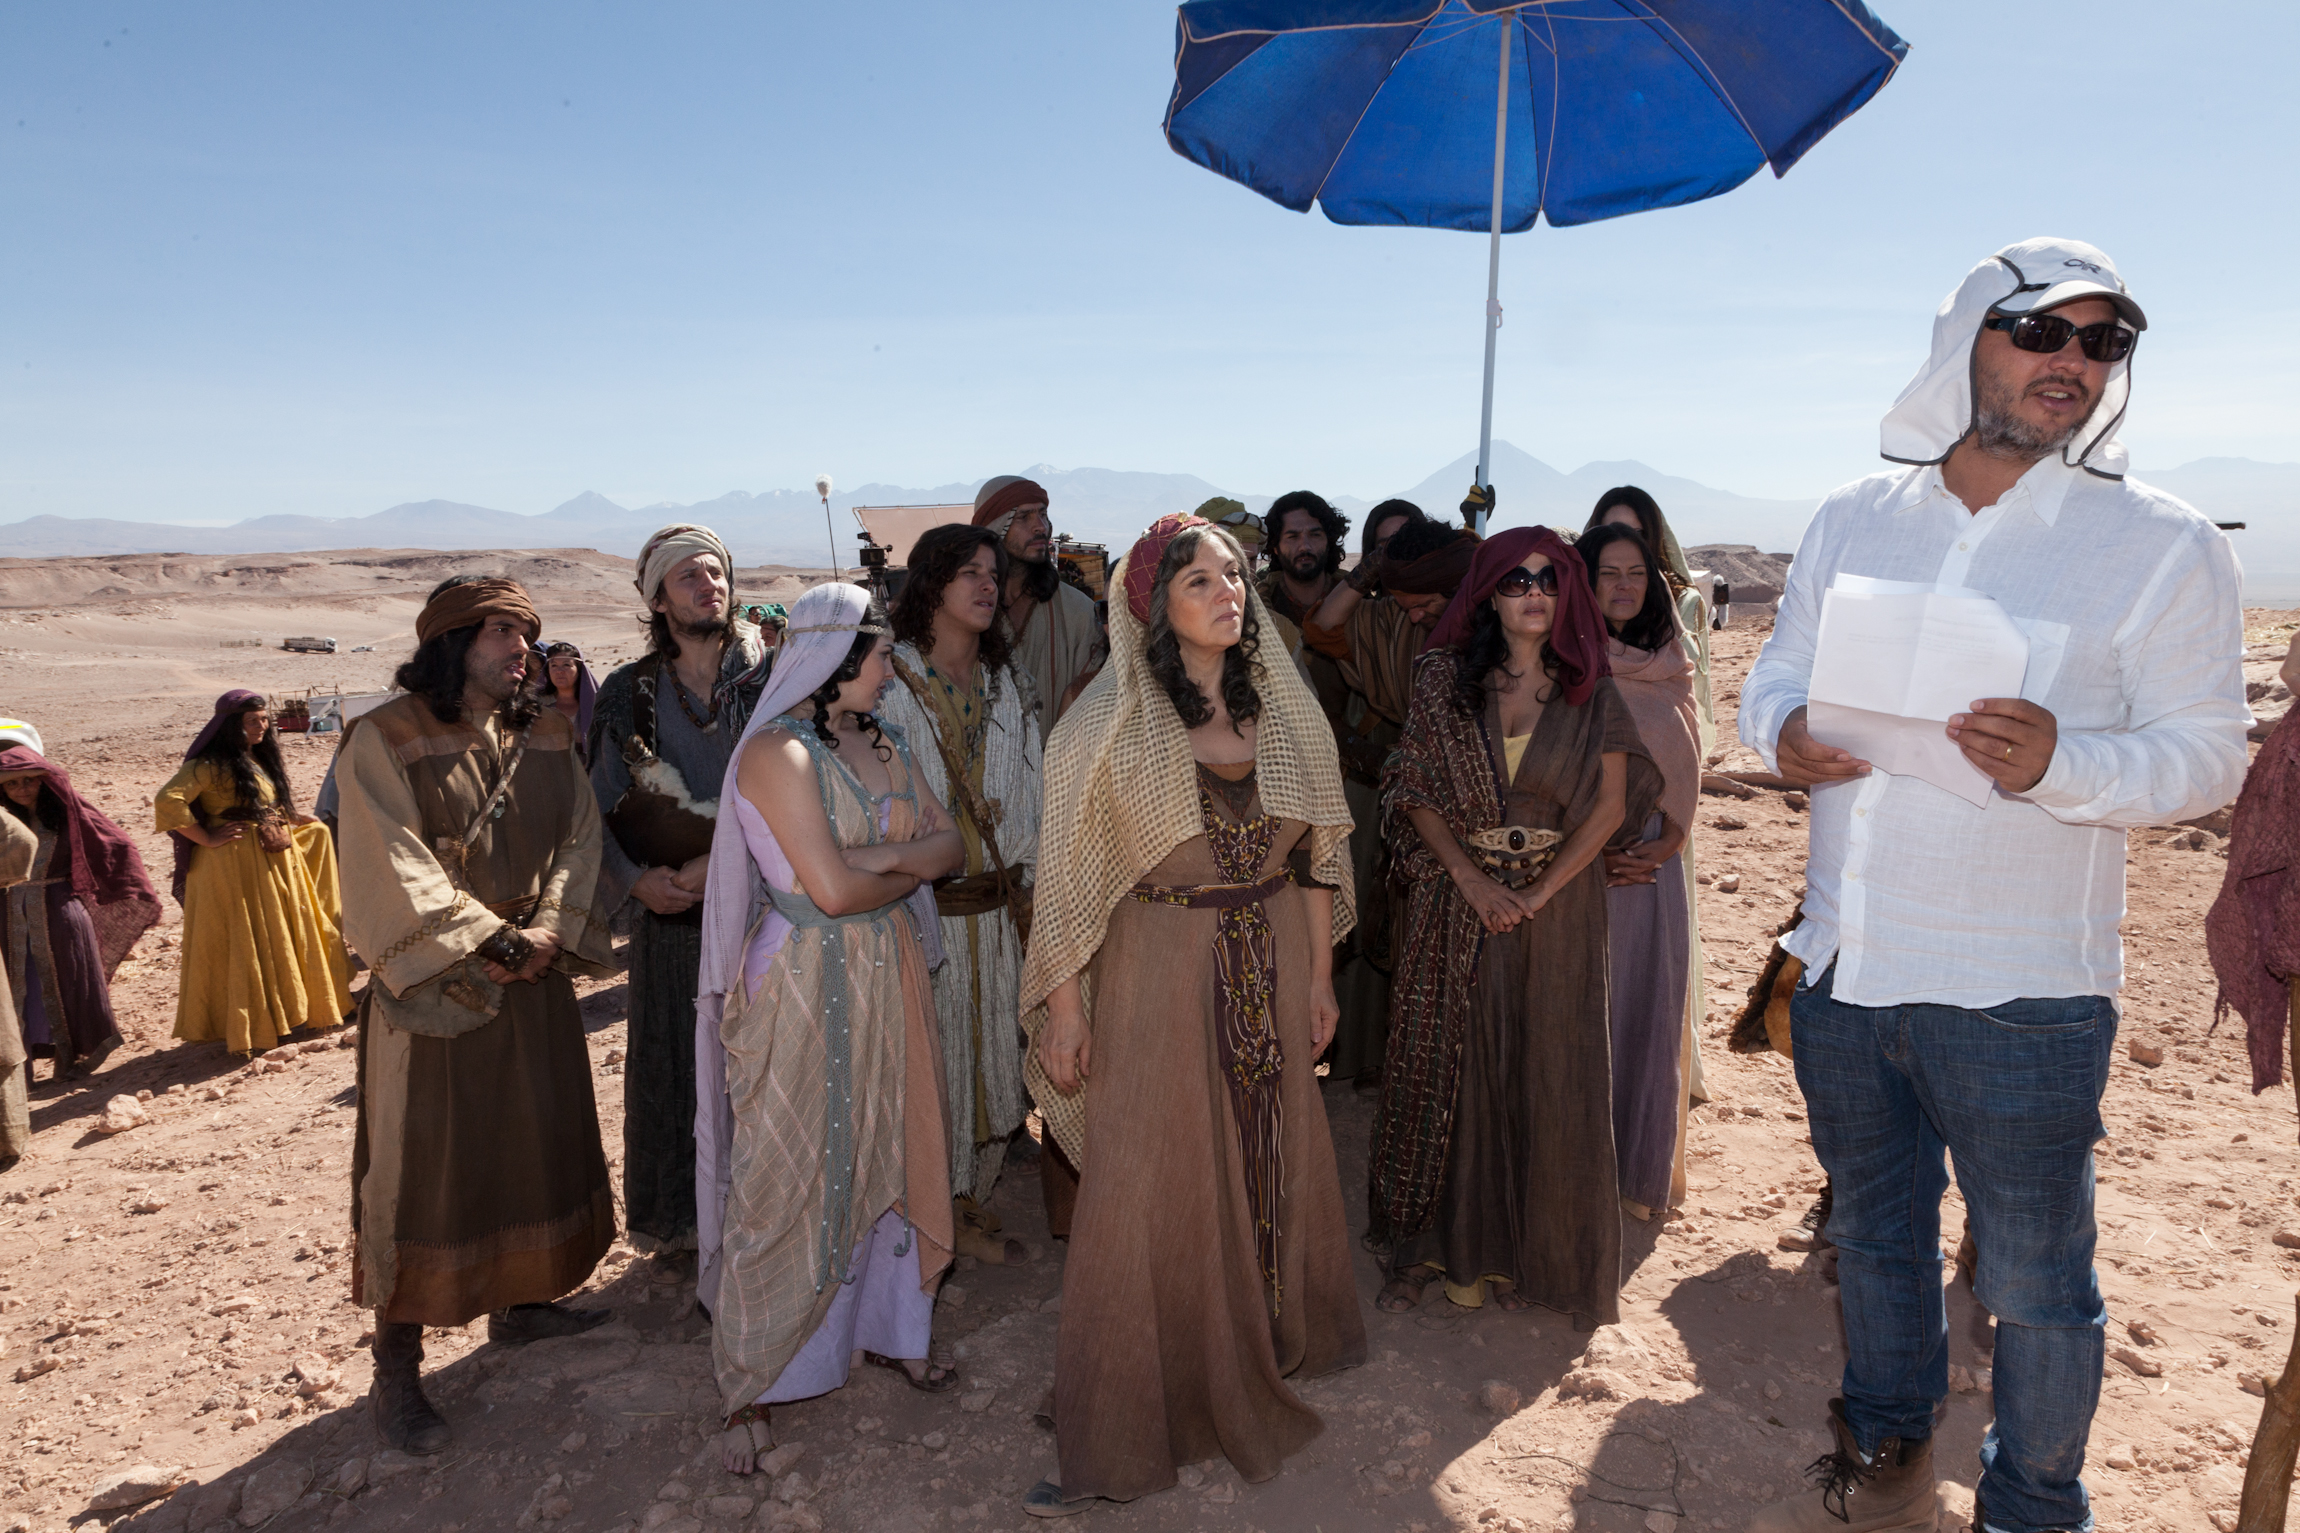 Alexandre Avancini, Denise Del Vecchio, Andrea Avancini and Marcela Barroso in Atacama Desert, Chile, for Jose do Egito (TV series 2013).